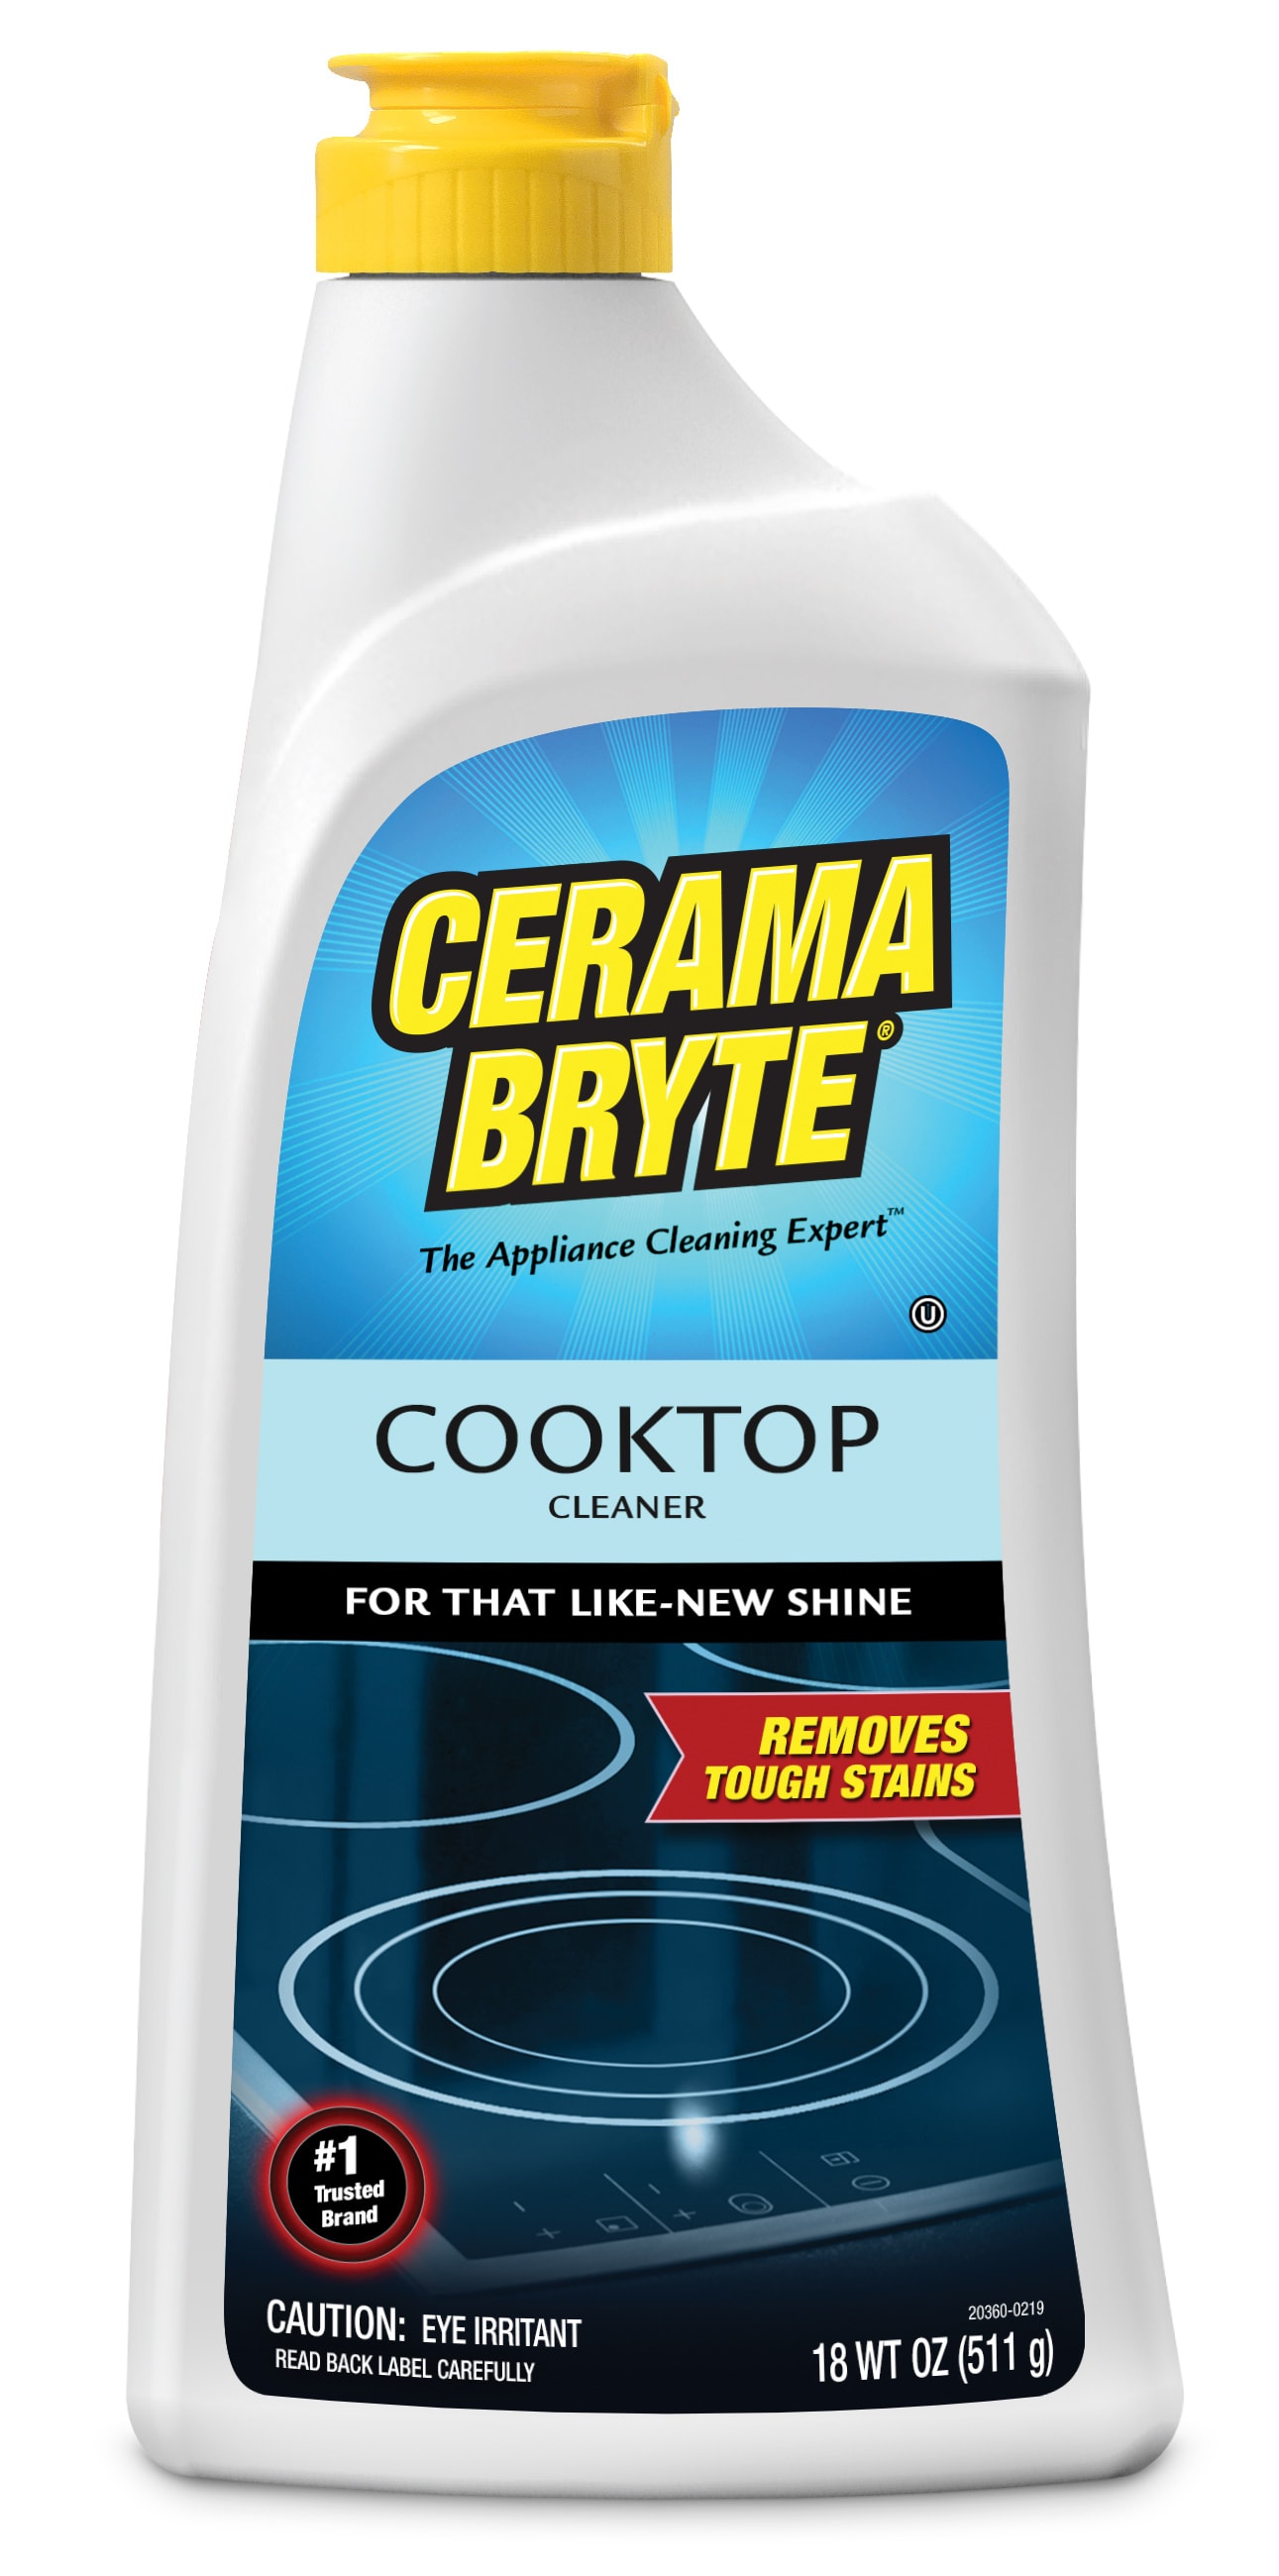 Cerama Bryte Ceramic Cooktop Cleaning Kit